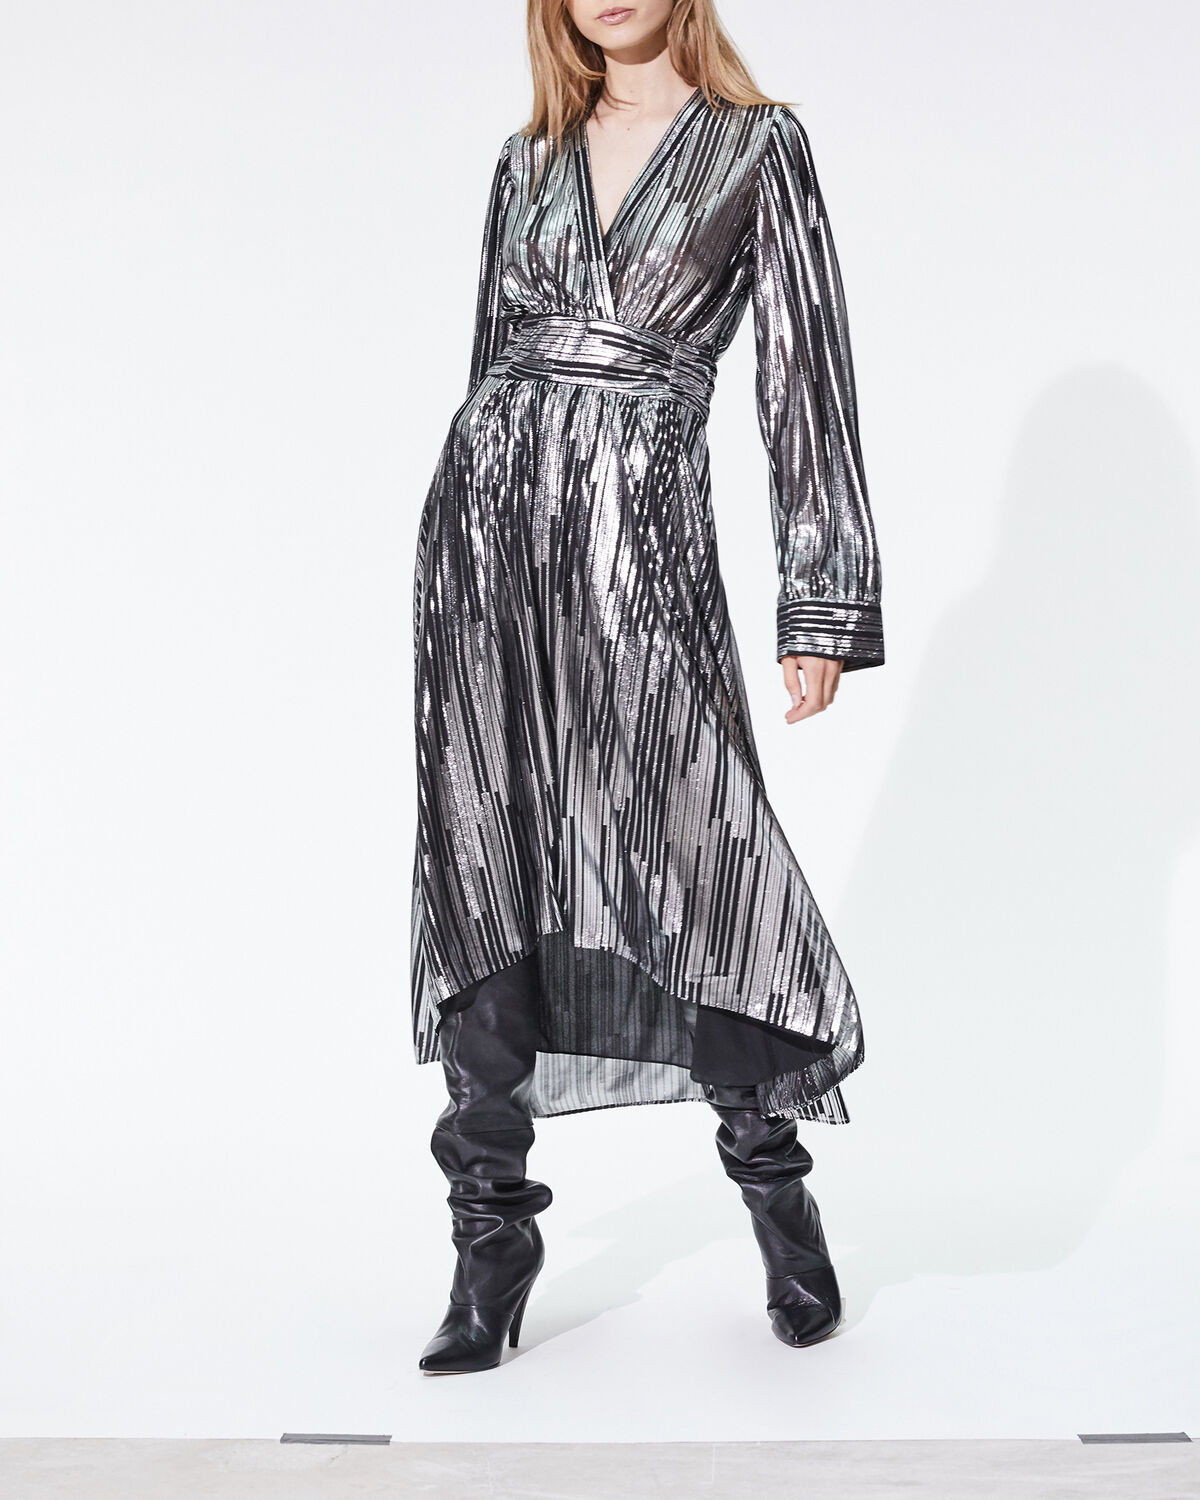 Eureka Dress Black And Silver by IRO Paris